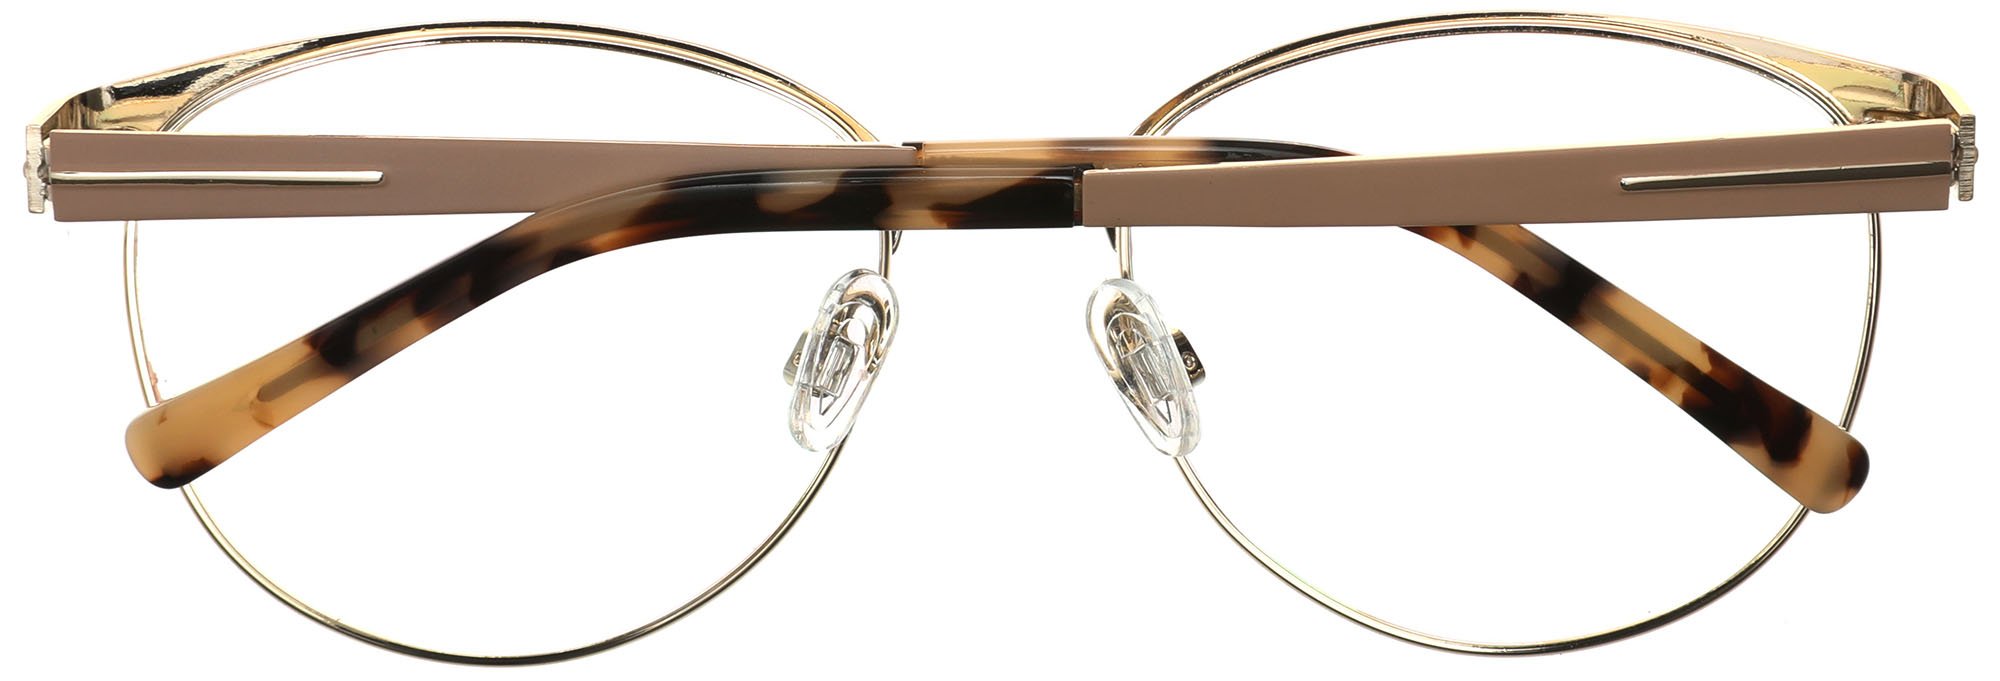 Tango Optics Oval Metal Eyeglasses Frame Luxe RX Stainless Steel Elisabeth Noelle-Neumann Gold Accent For Prescription Lens-Samba Shades